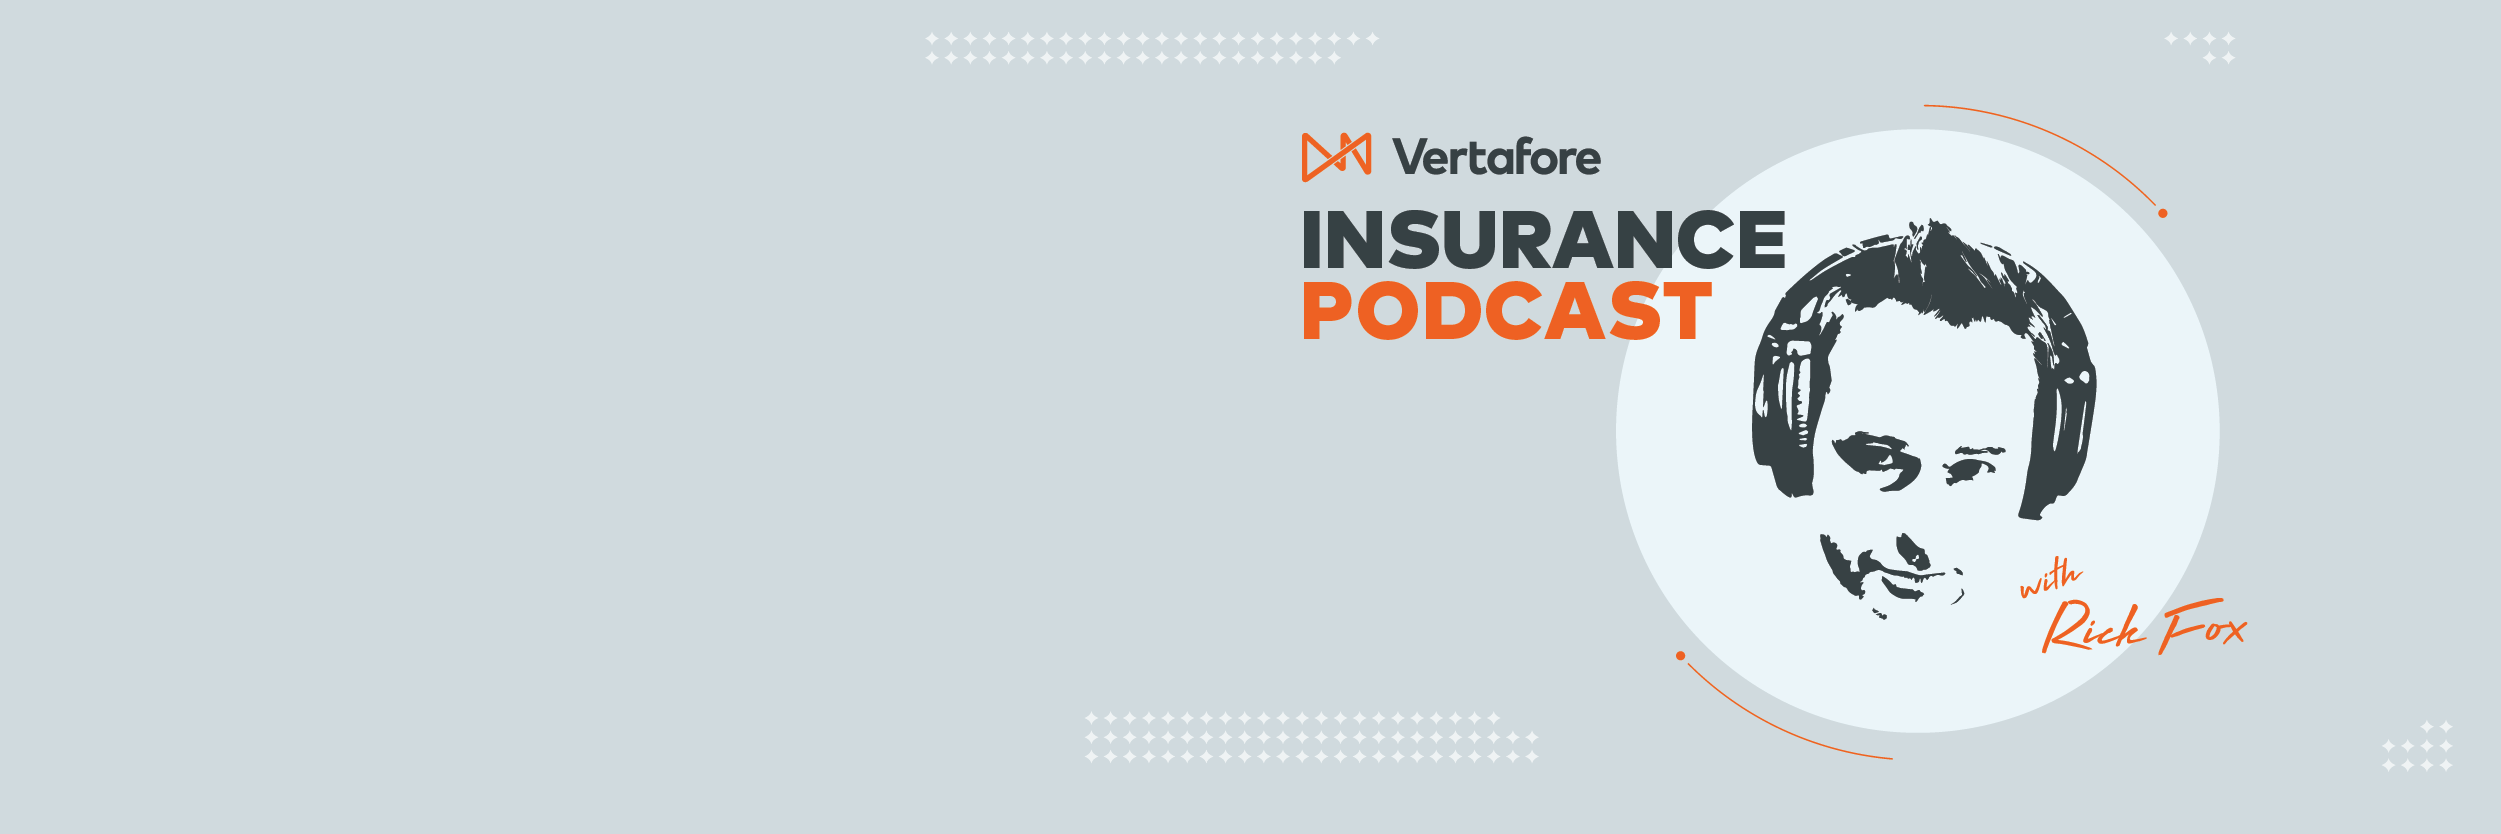 Vertafore Insurance Podcast